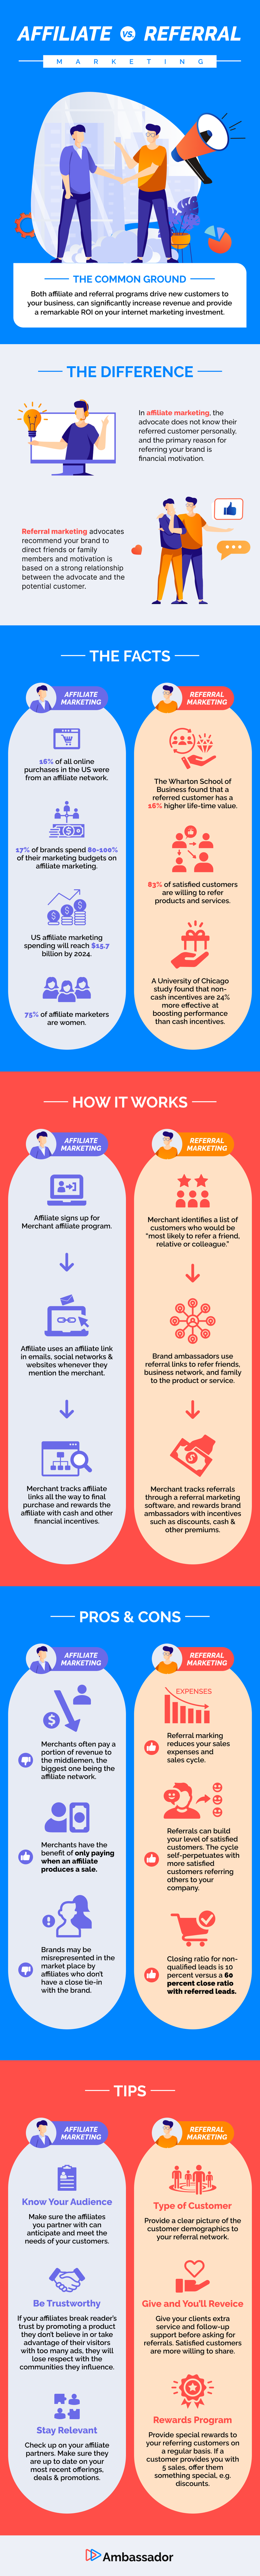 Affiliate Marketing vs. Referral Marketing (Infographic)